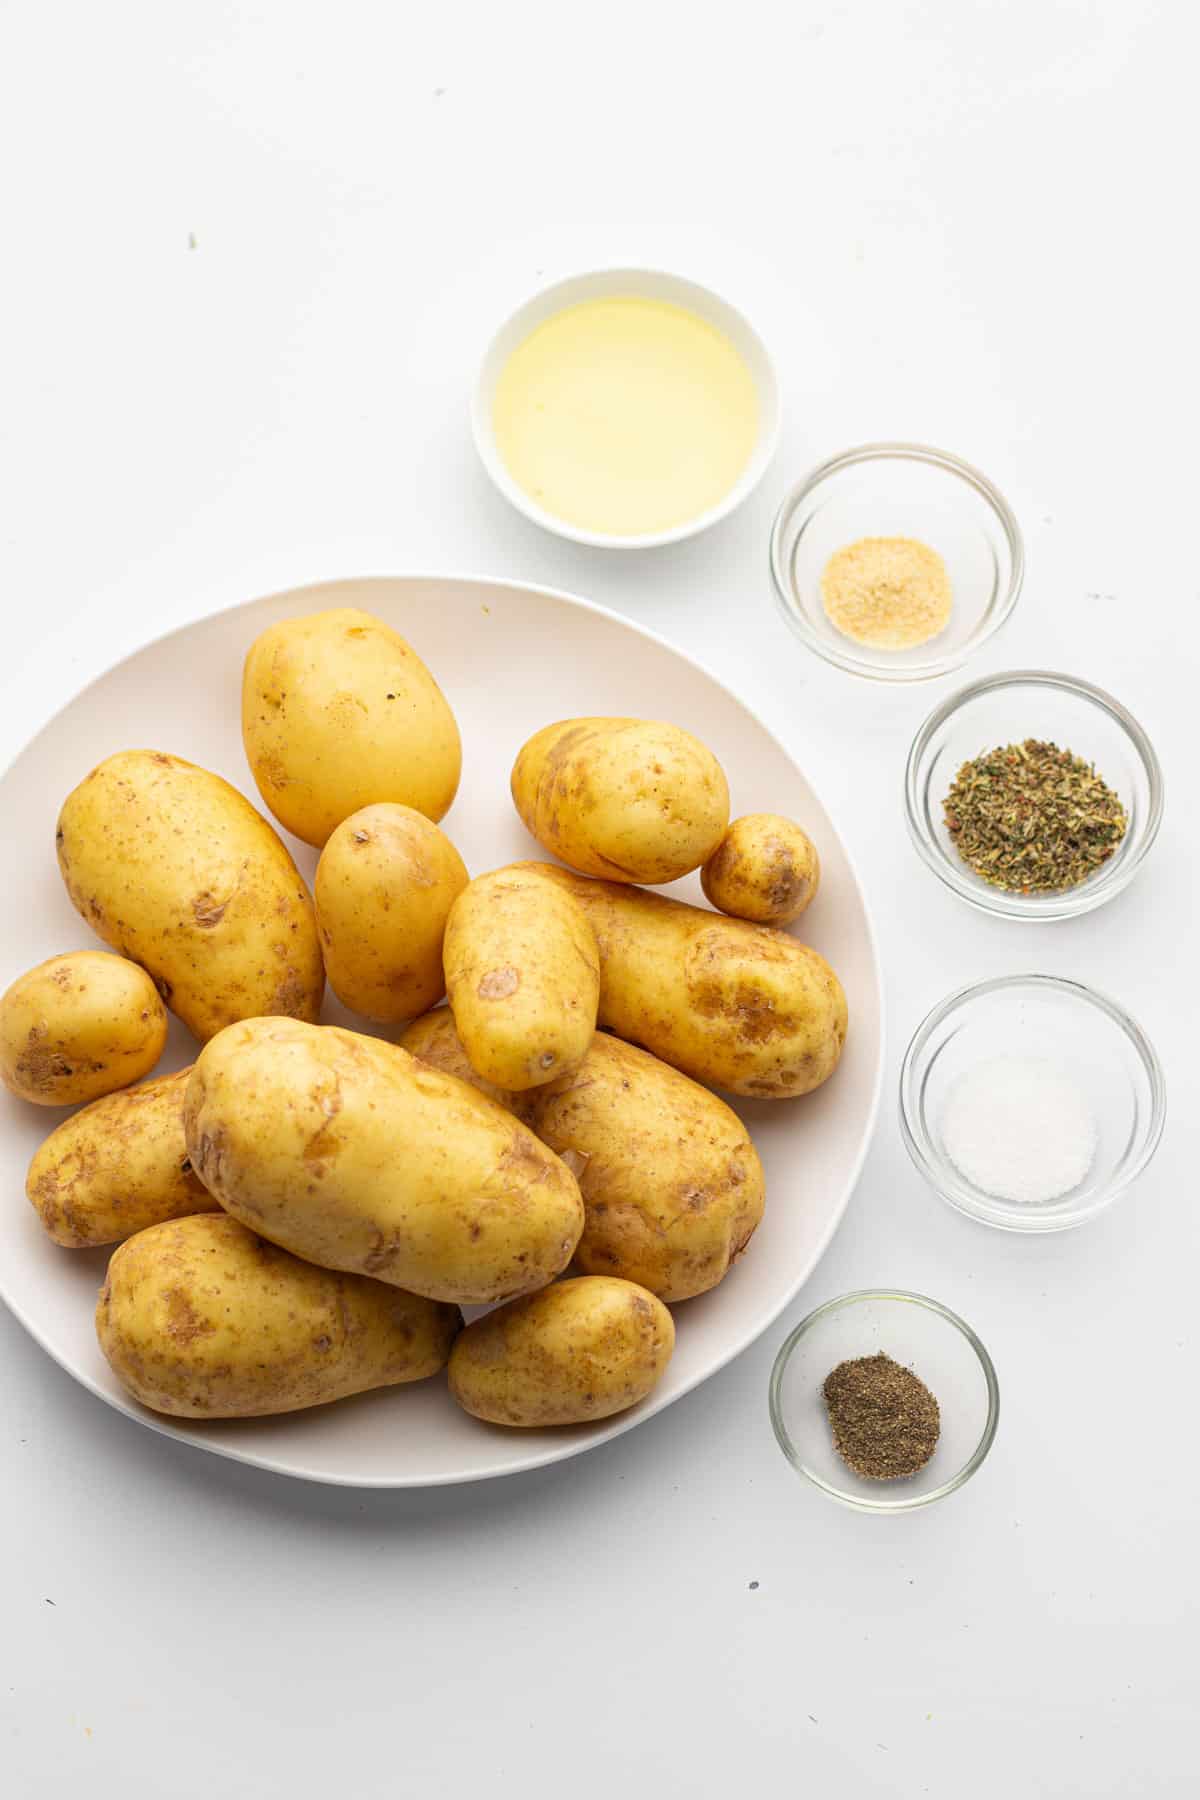 air fryer potato ingredients, including Yukon Gold potatoes, garlic powder, salt, pepper and Italian seasoning blend